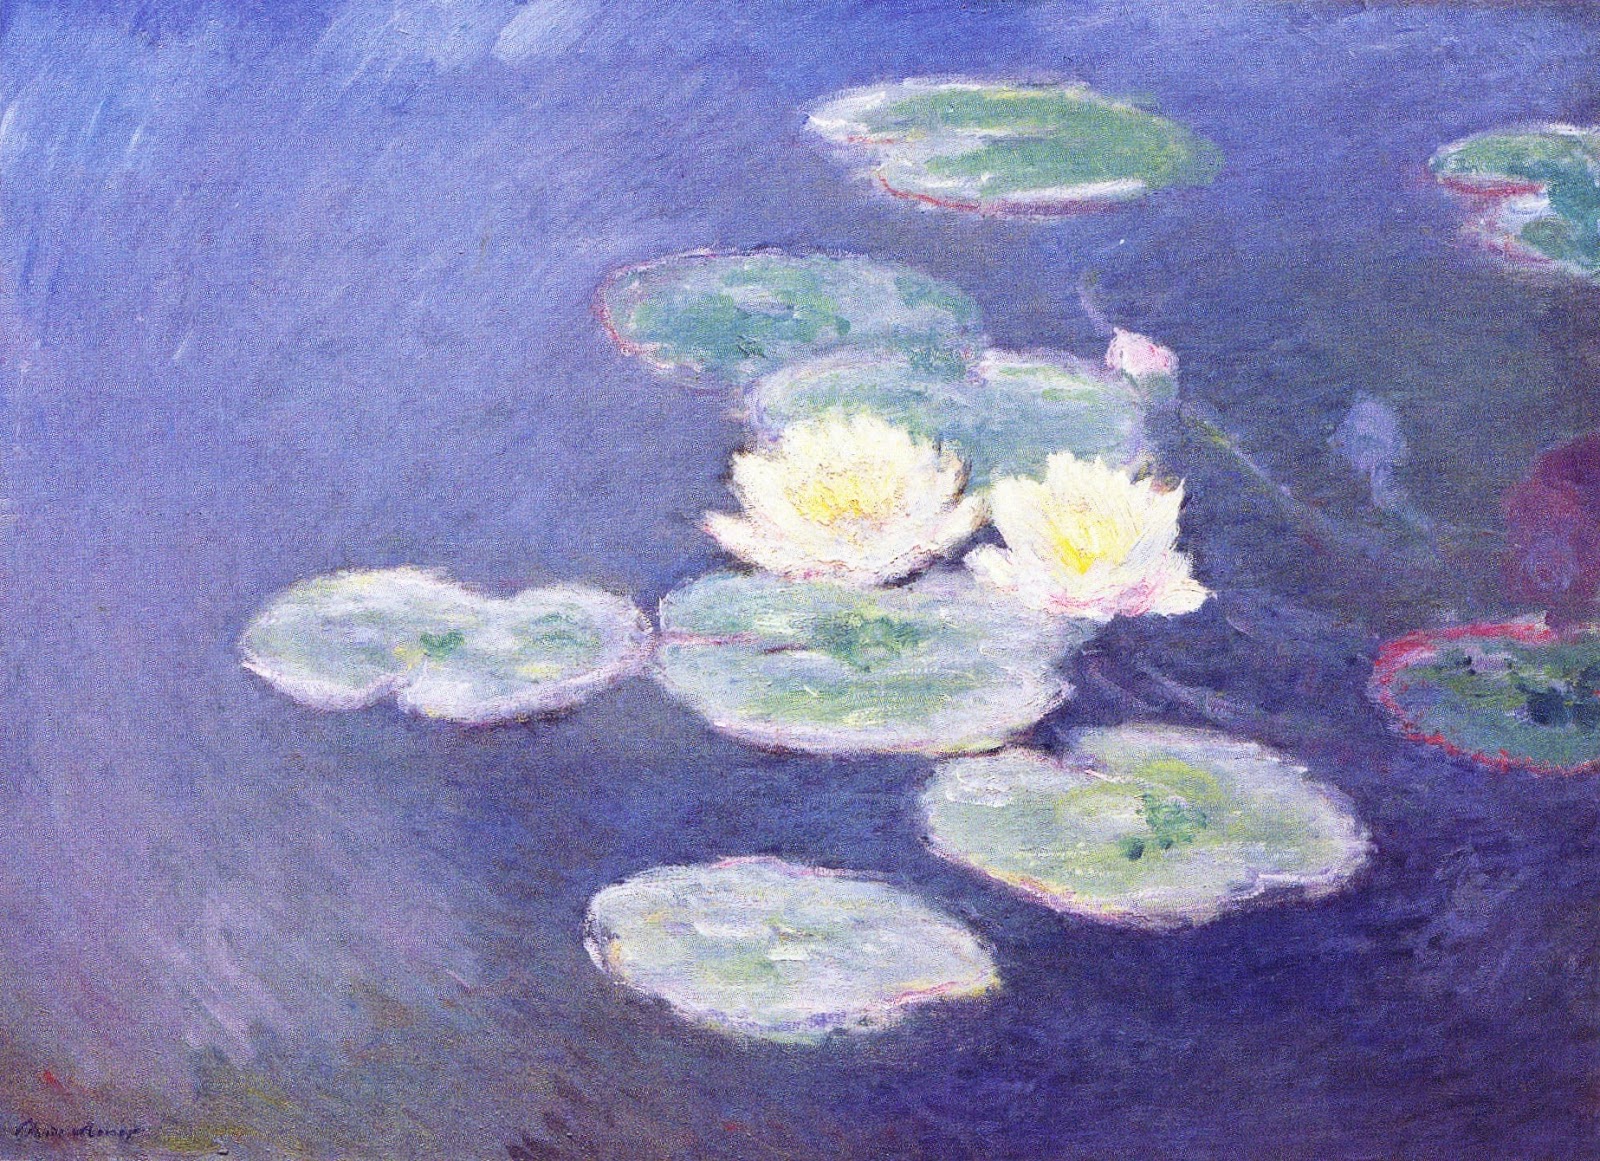 Claude+Monet-1840-1926 (855).jpg